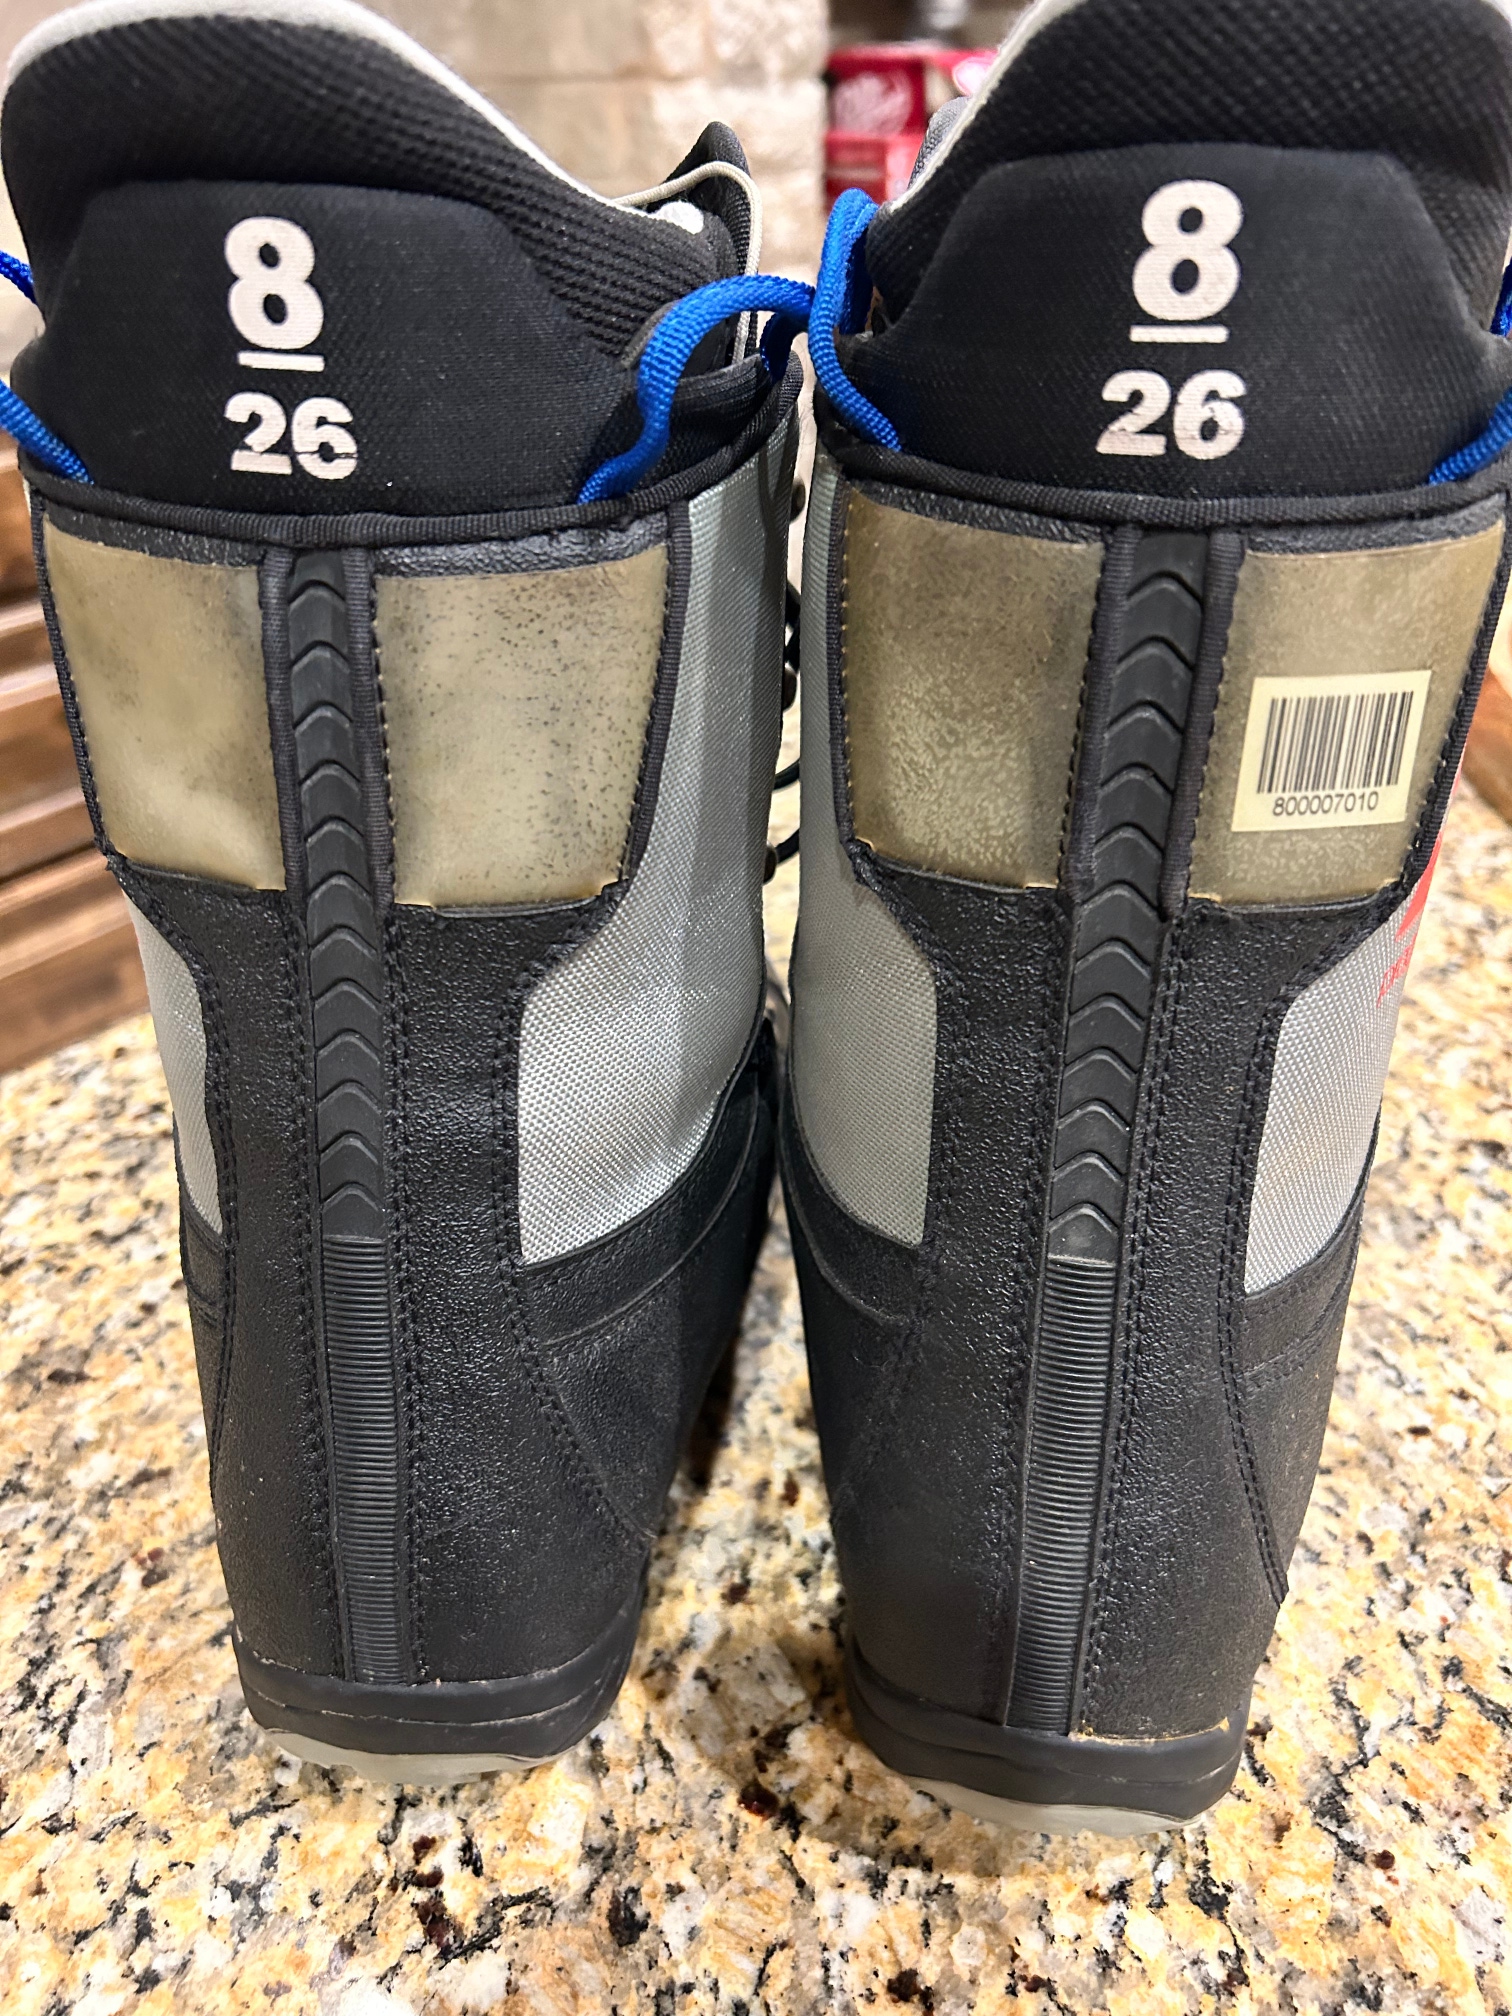 Unisex Used Size 8.0 (Women's 9.0) Burton Progression Snowboard Boots